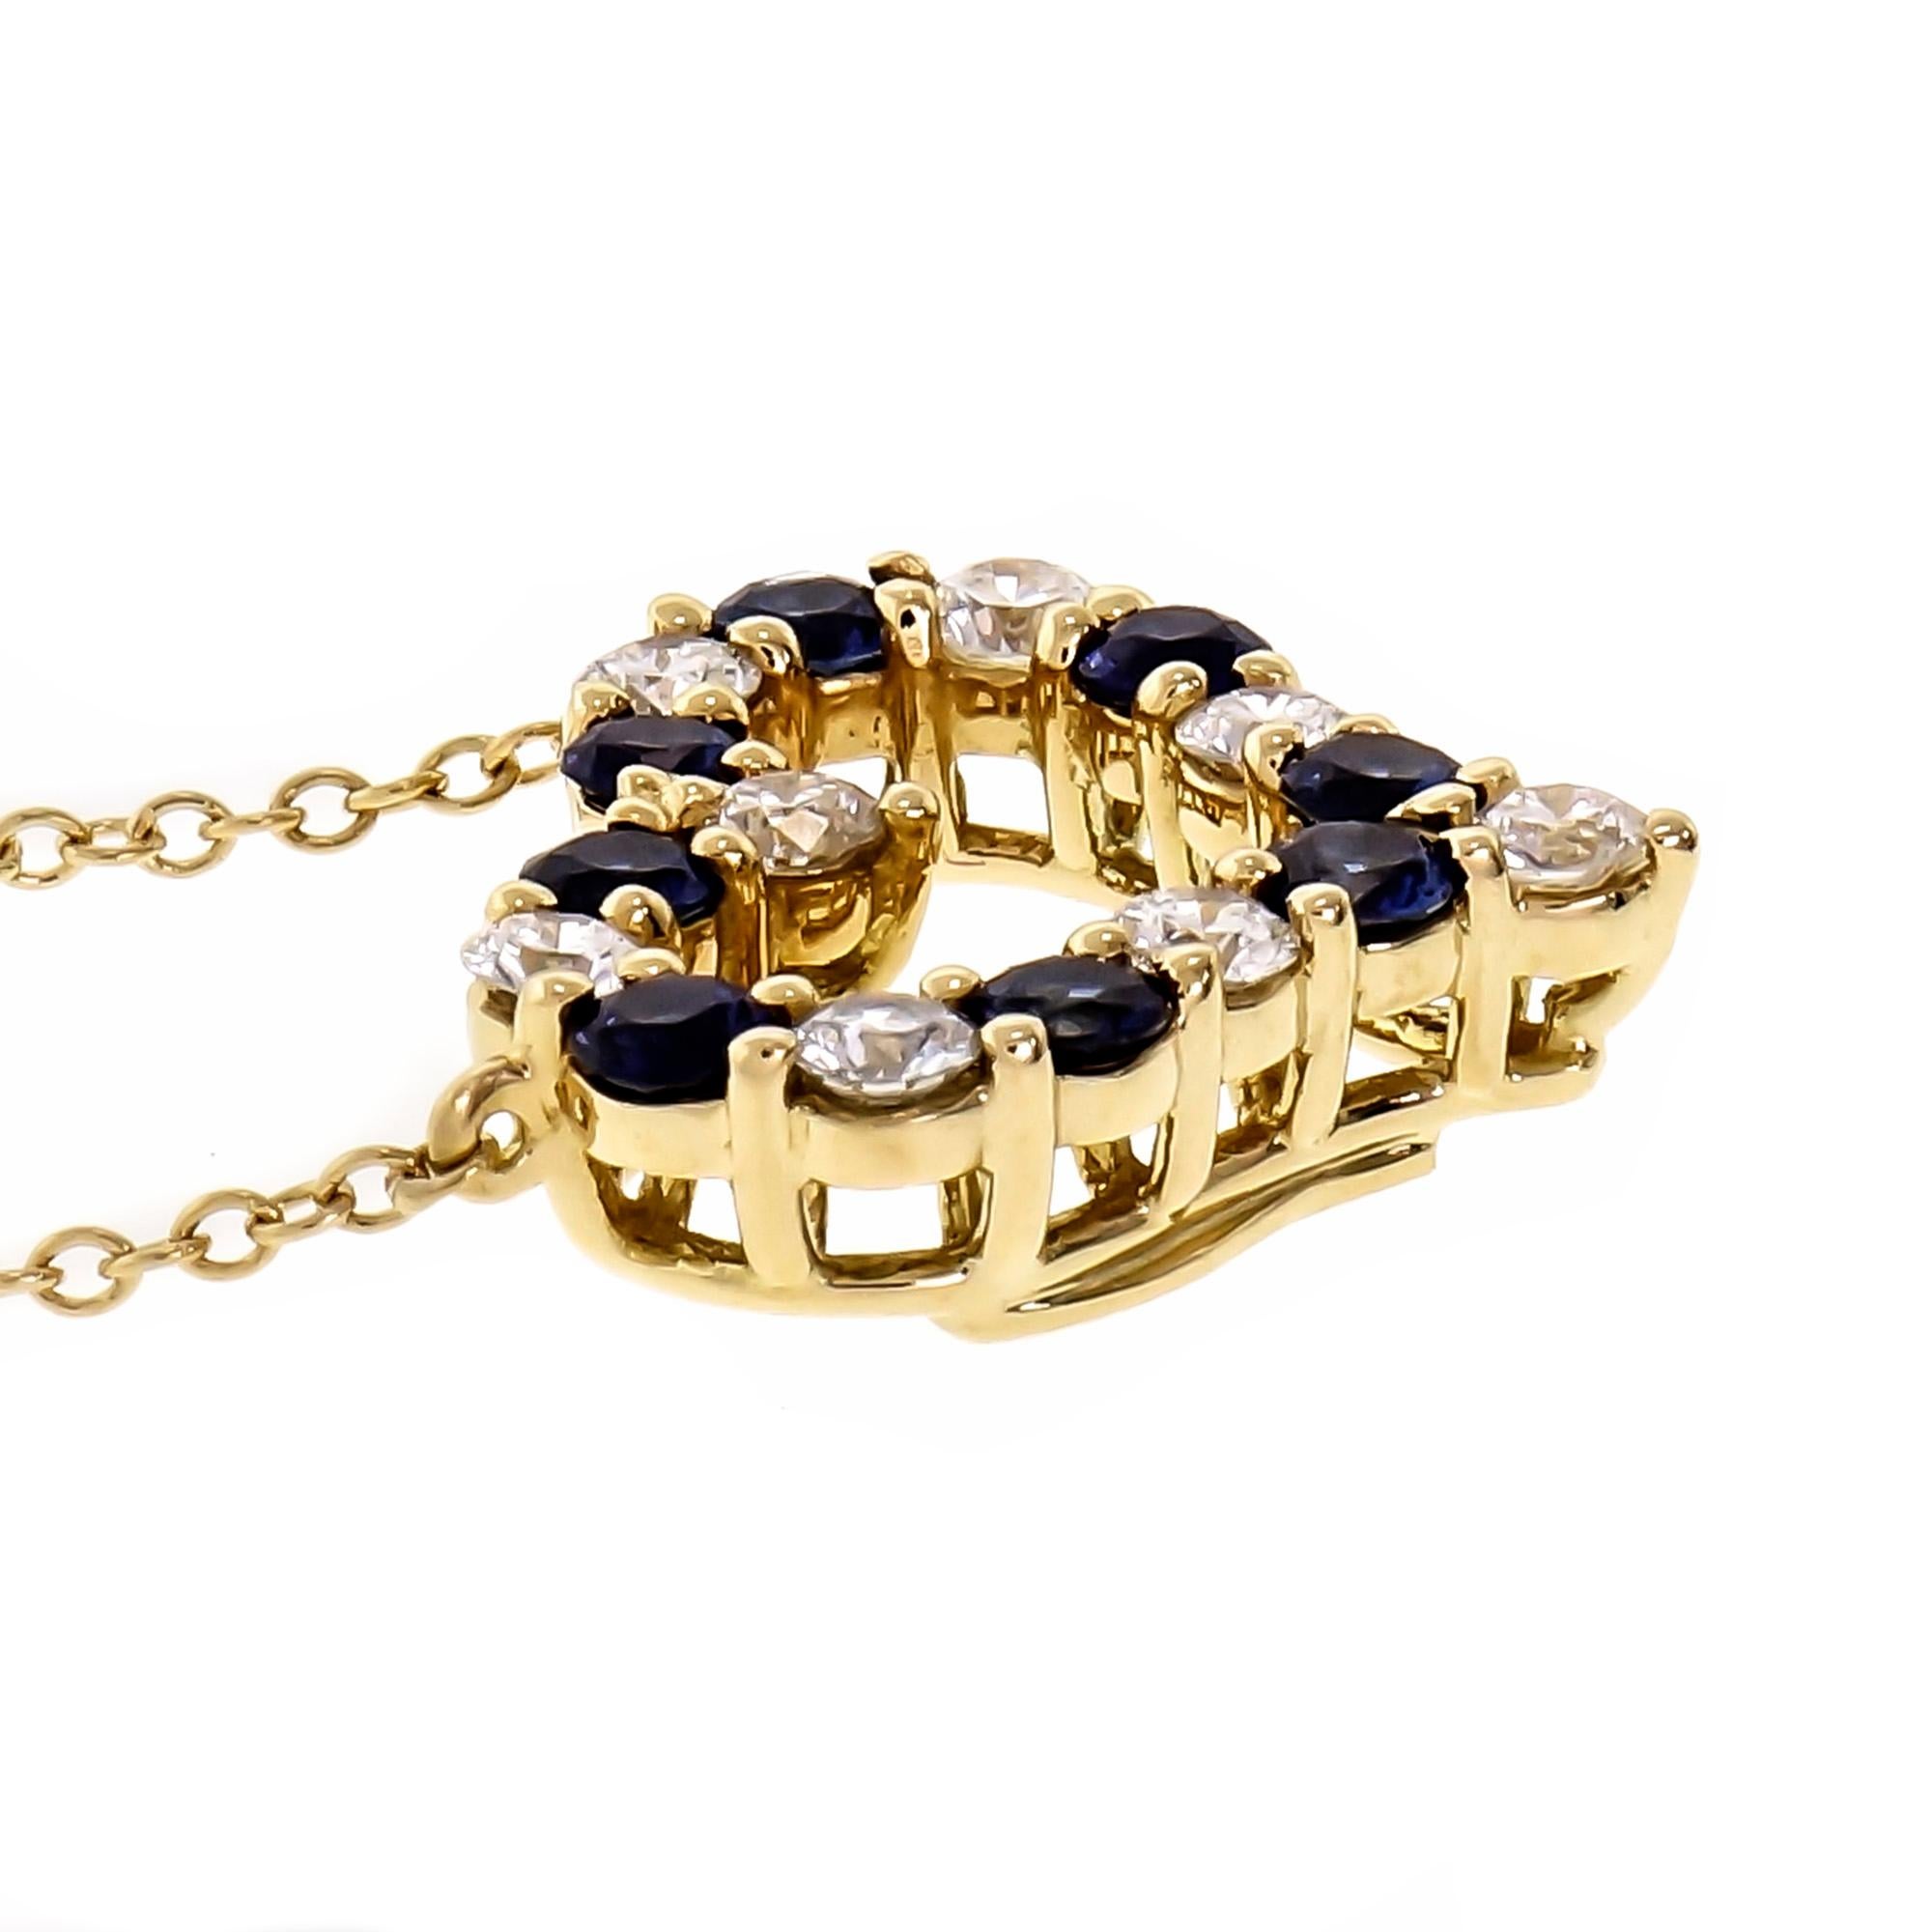 tiffany gold pendant necklace